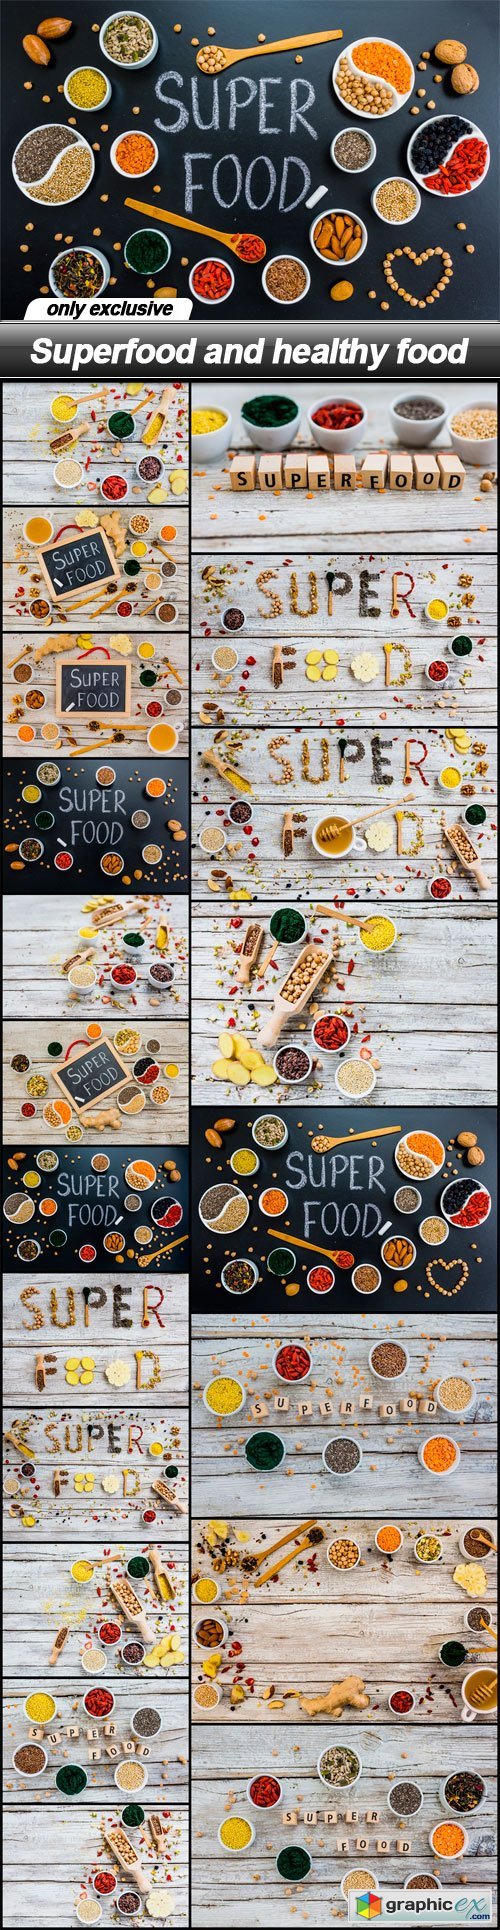 Superfood and healthy food - 20 UHQ JPEG